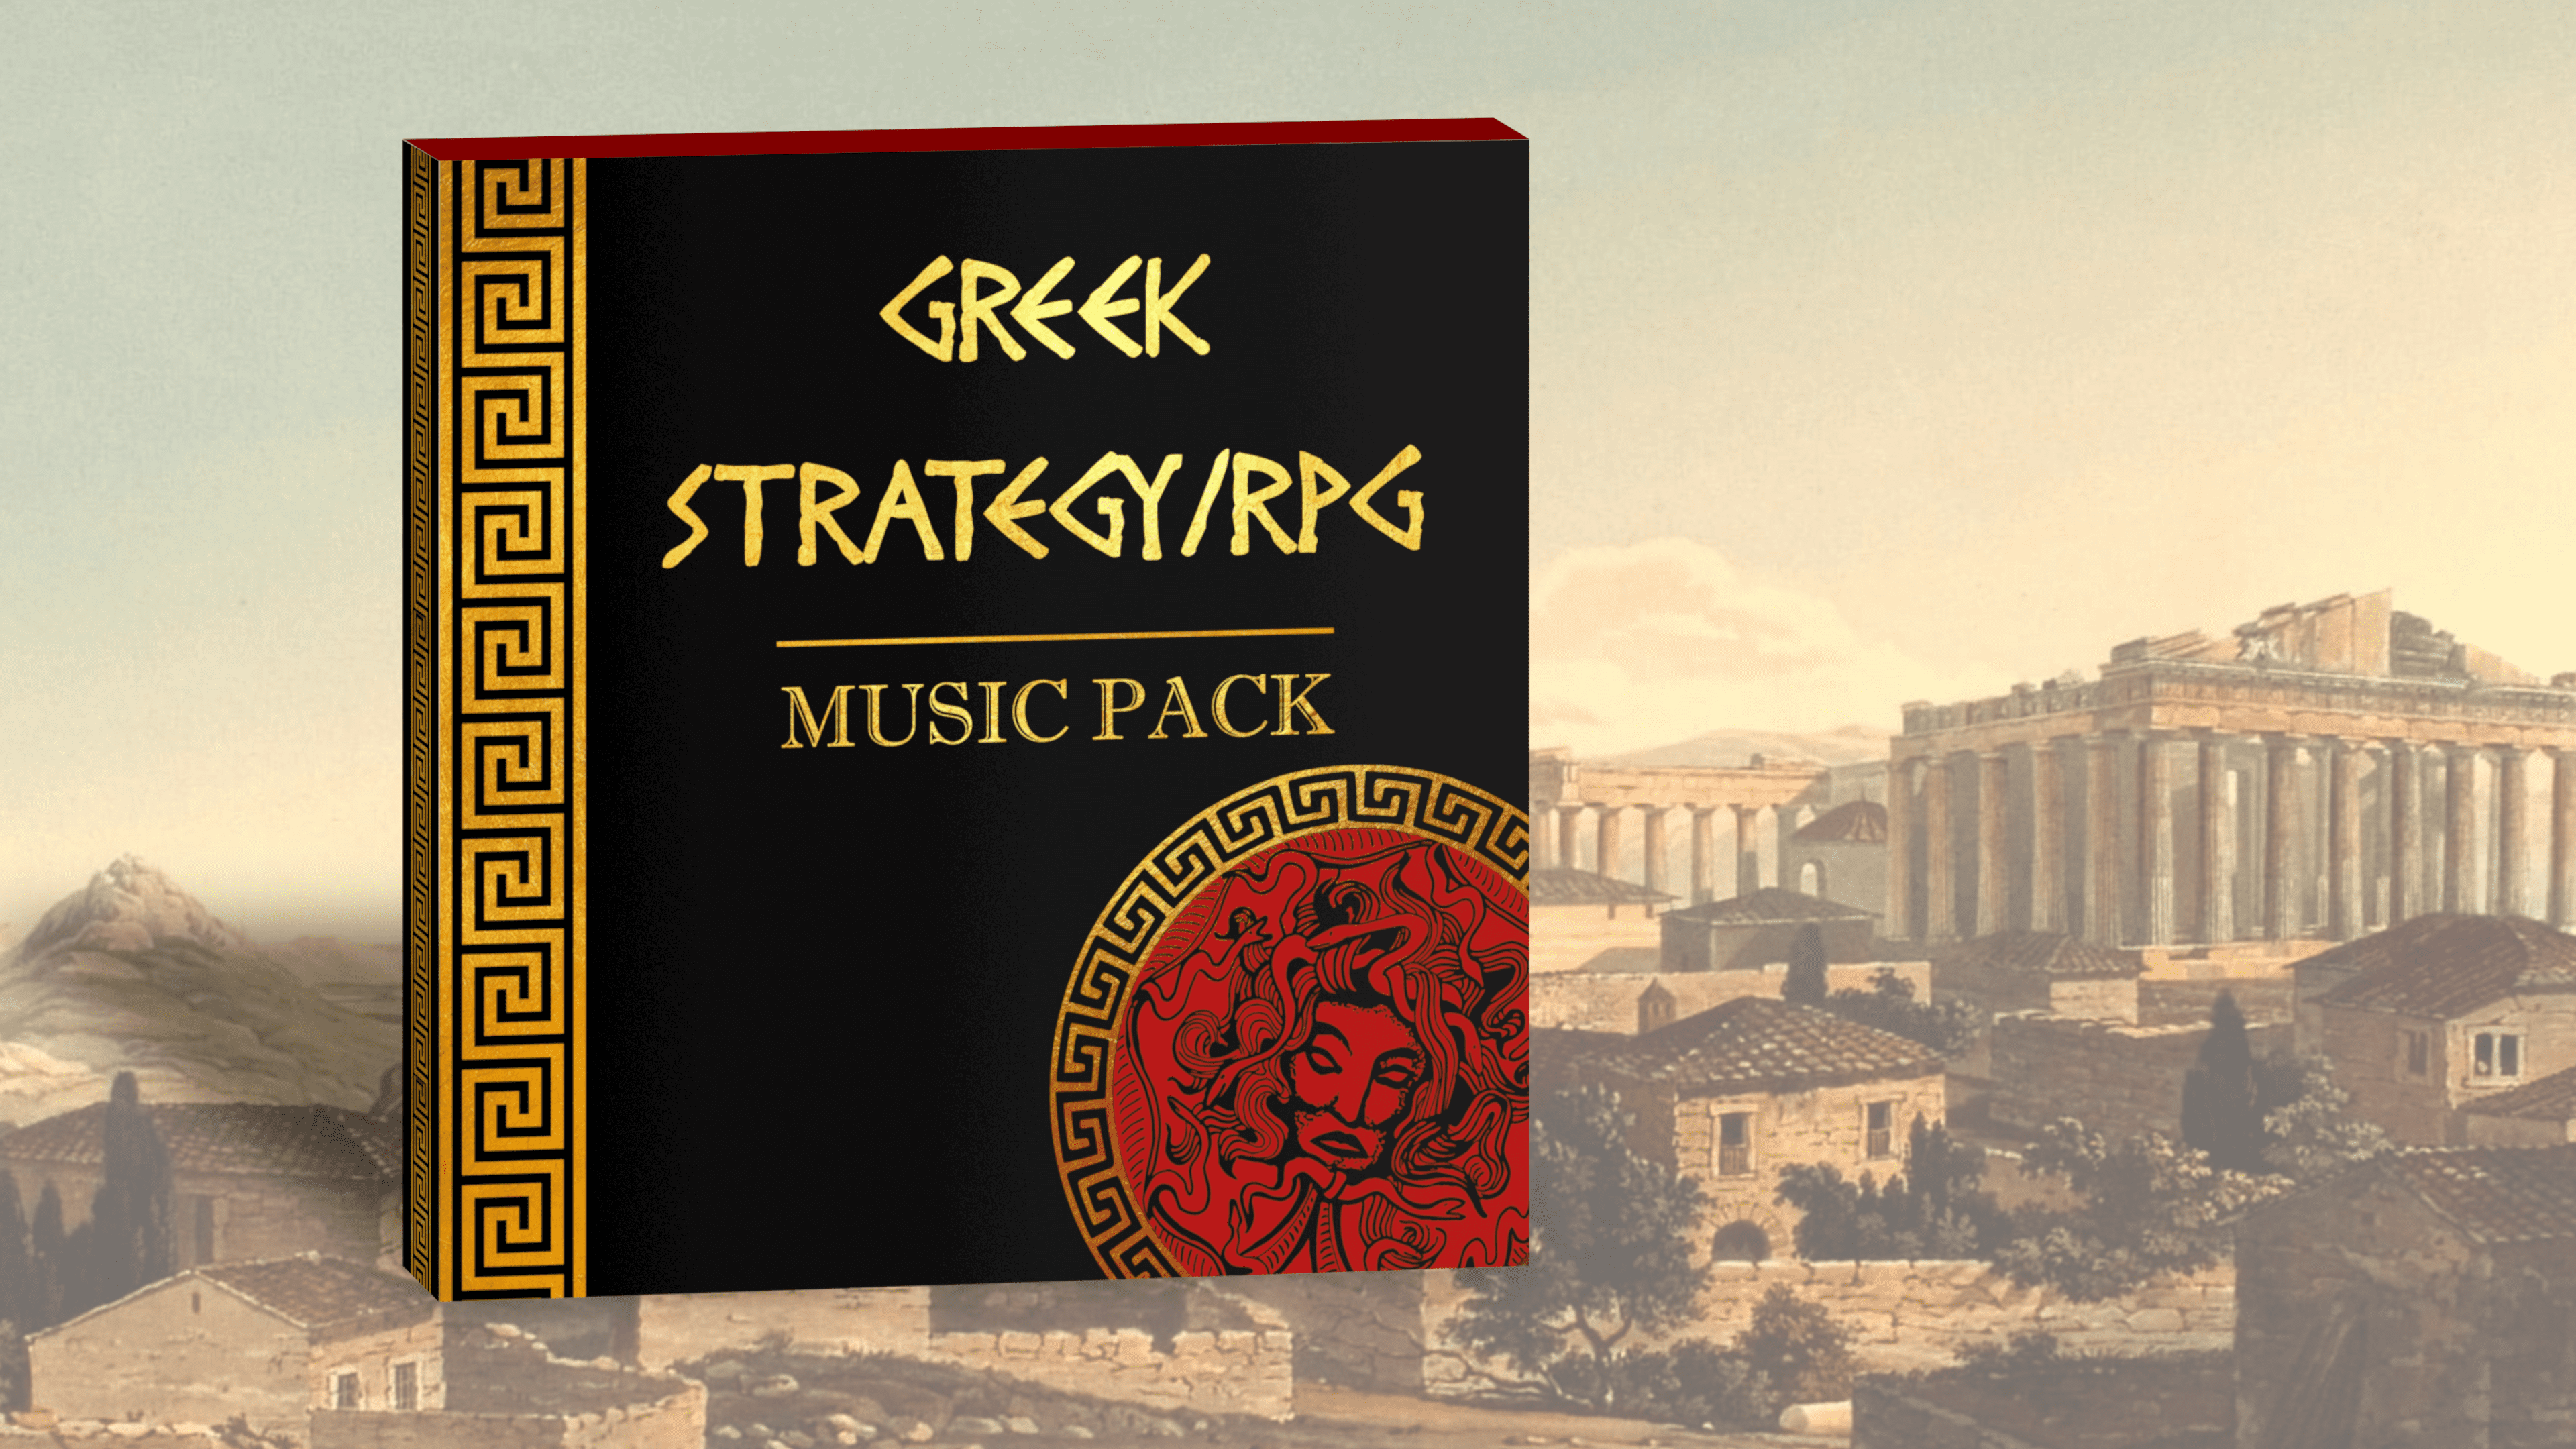 Greek Strategy/RPG Music pack